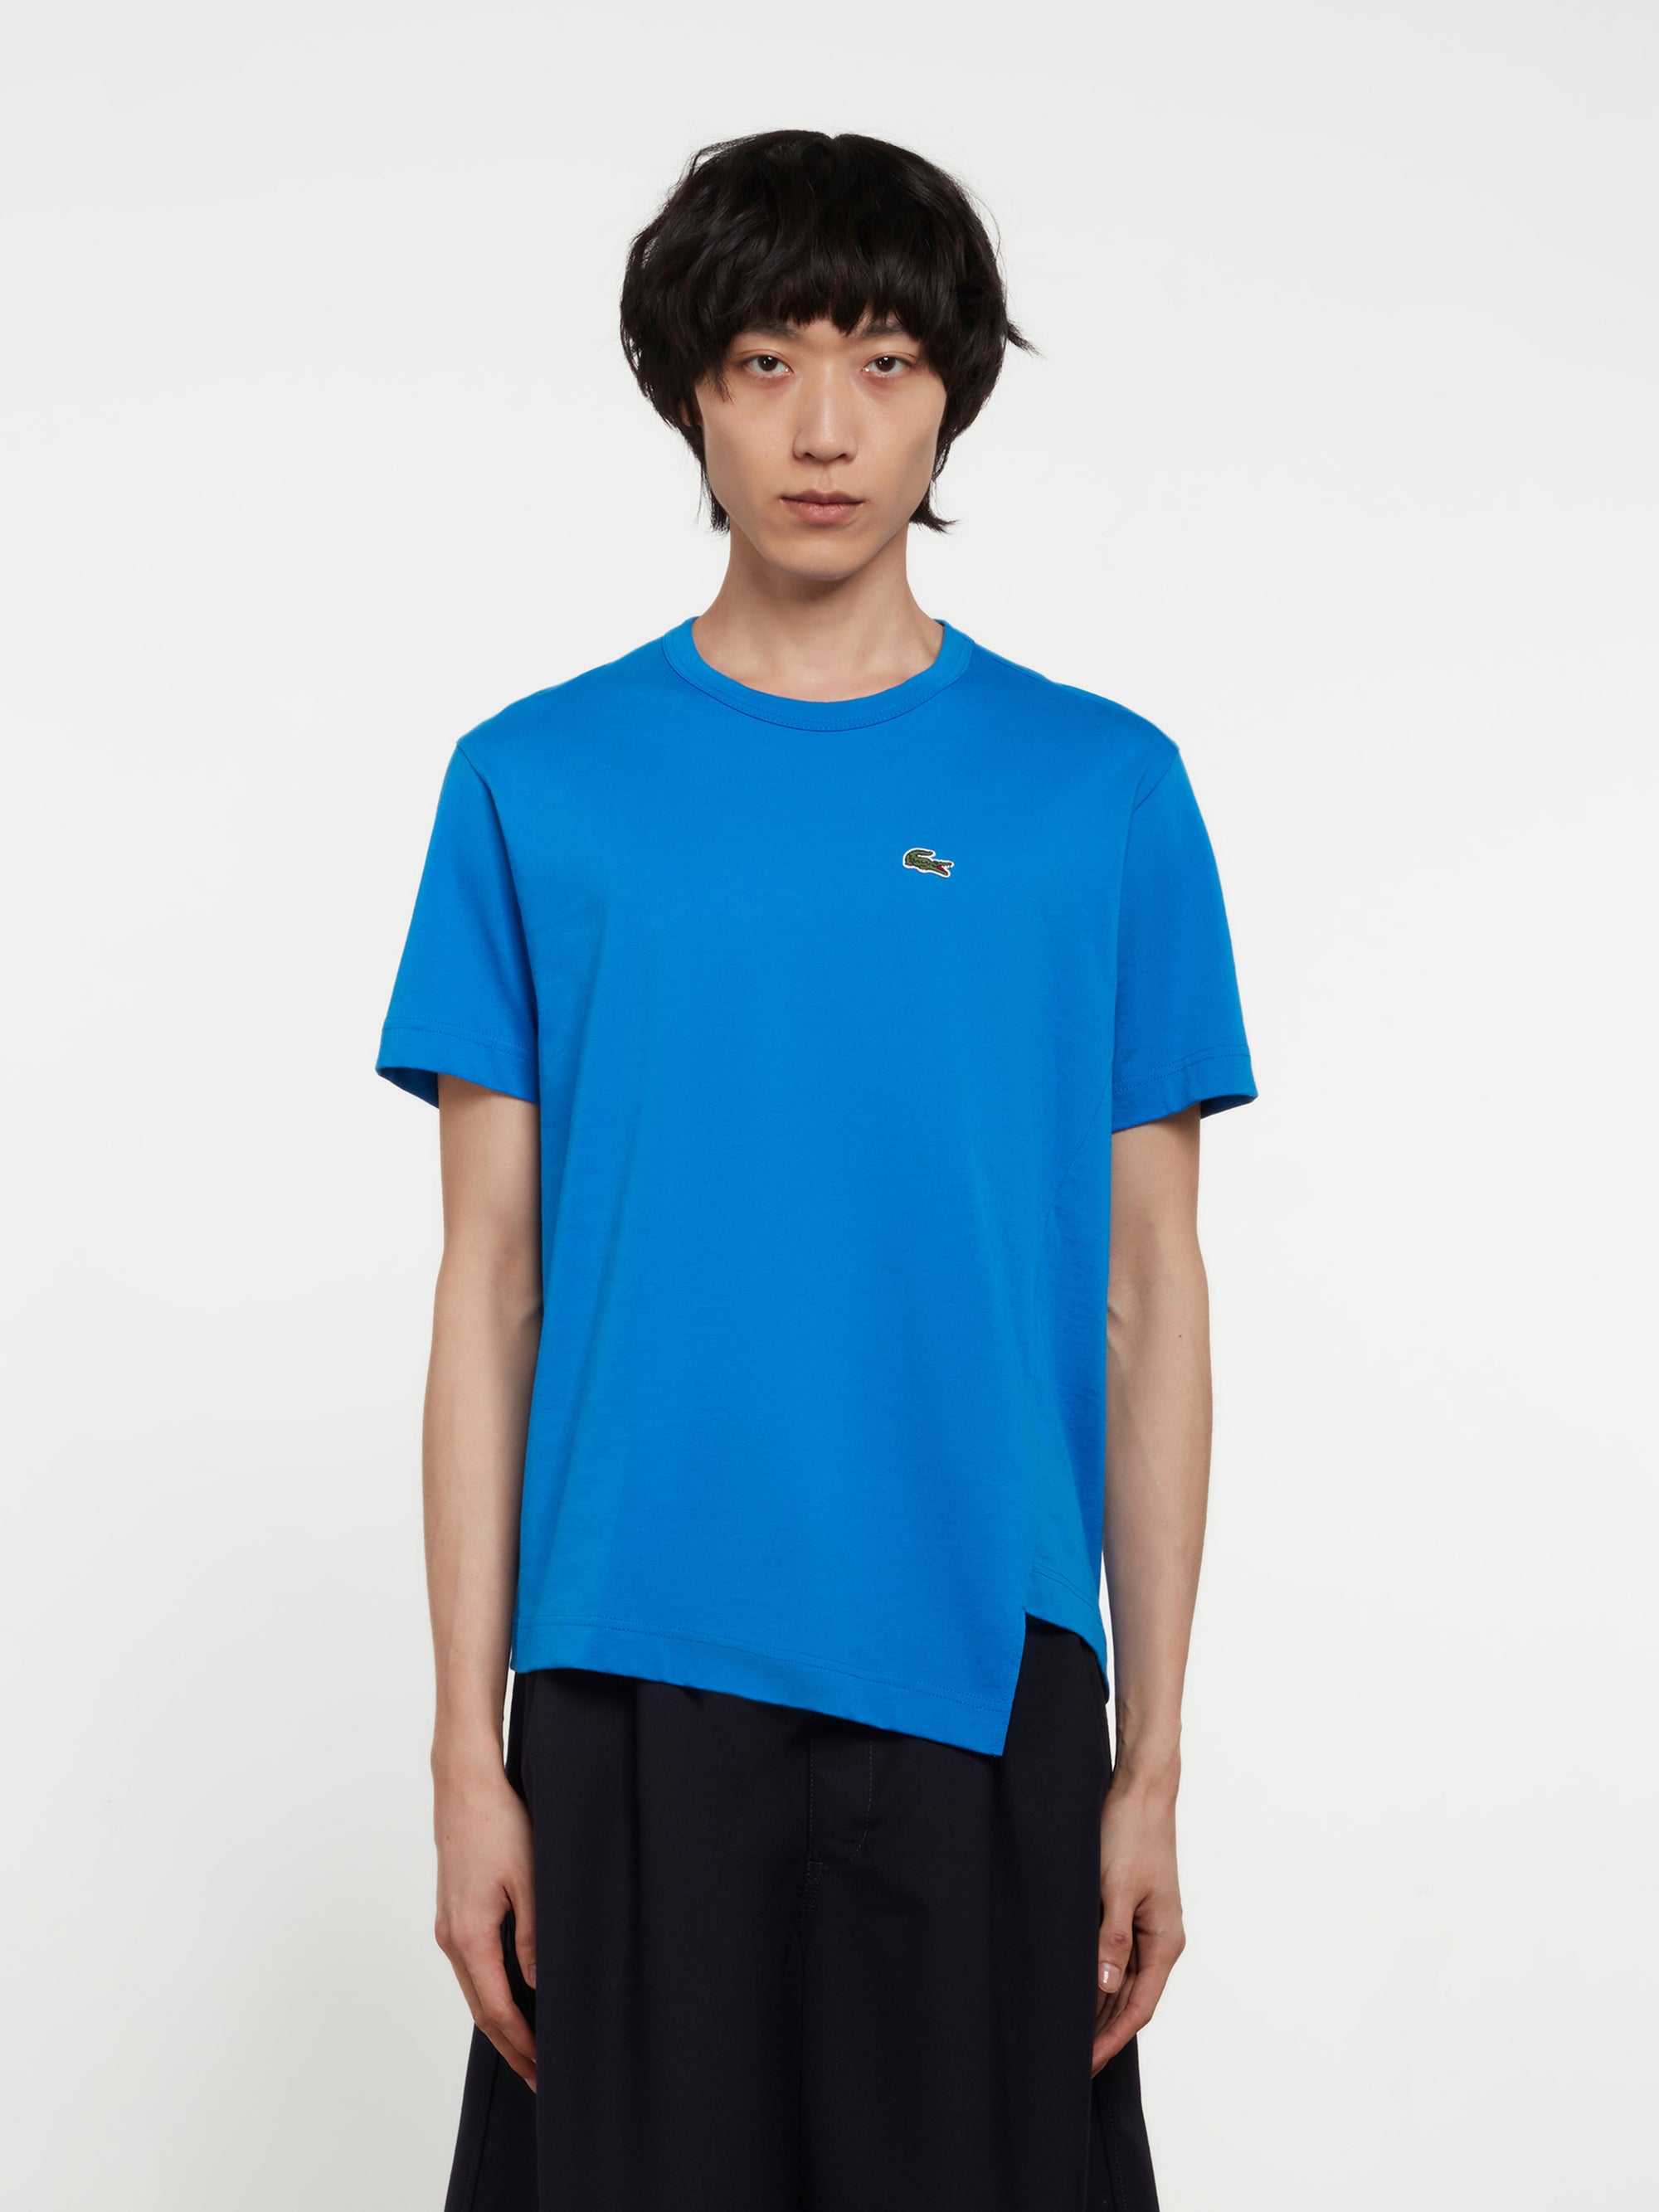 CDG Shirt - Lacoste Men's T-Shirt - (Blue) view 1